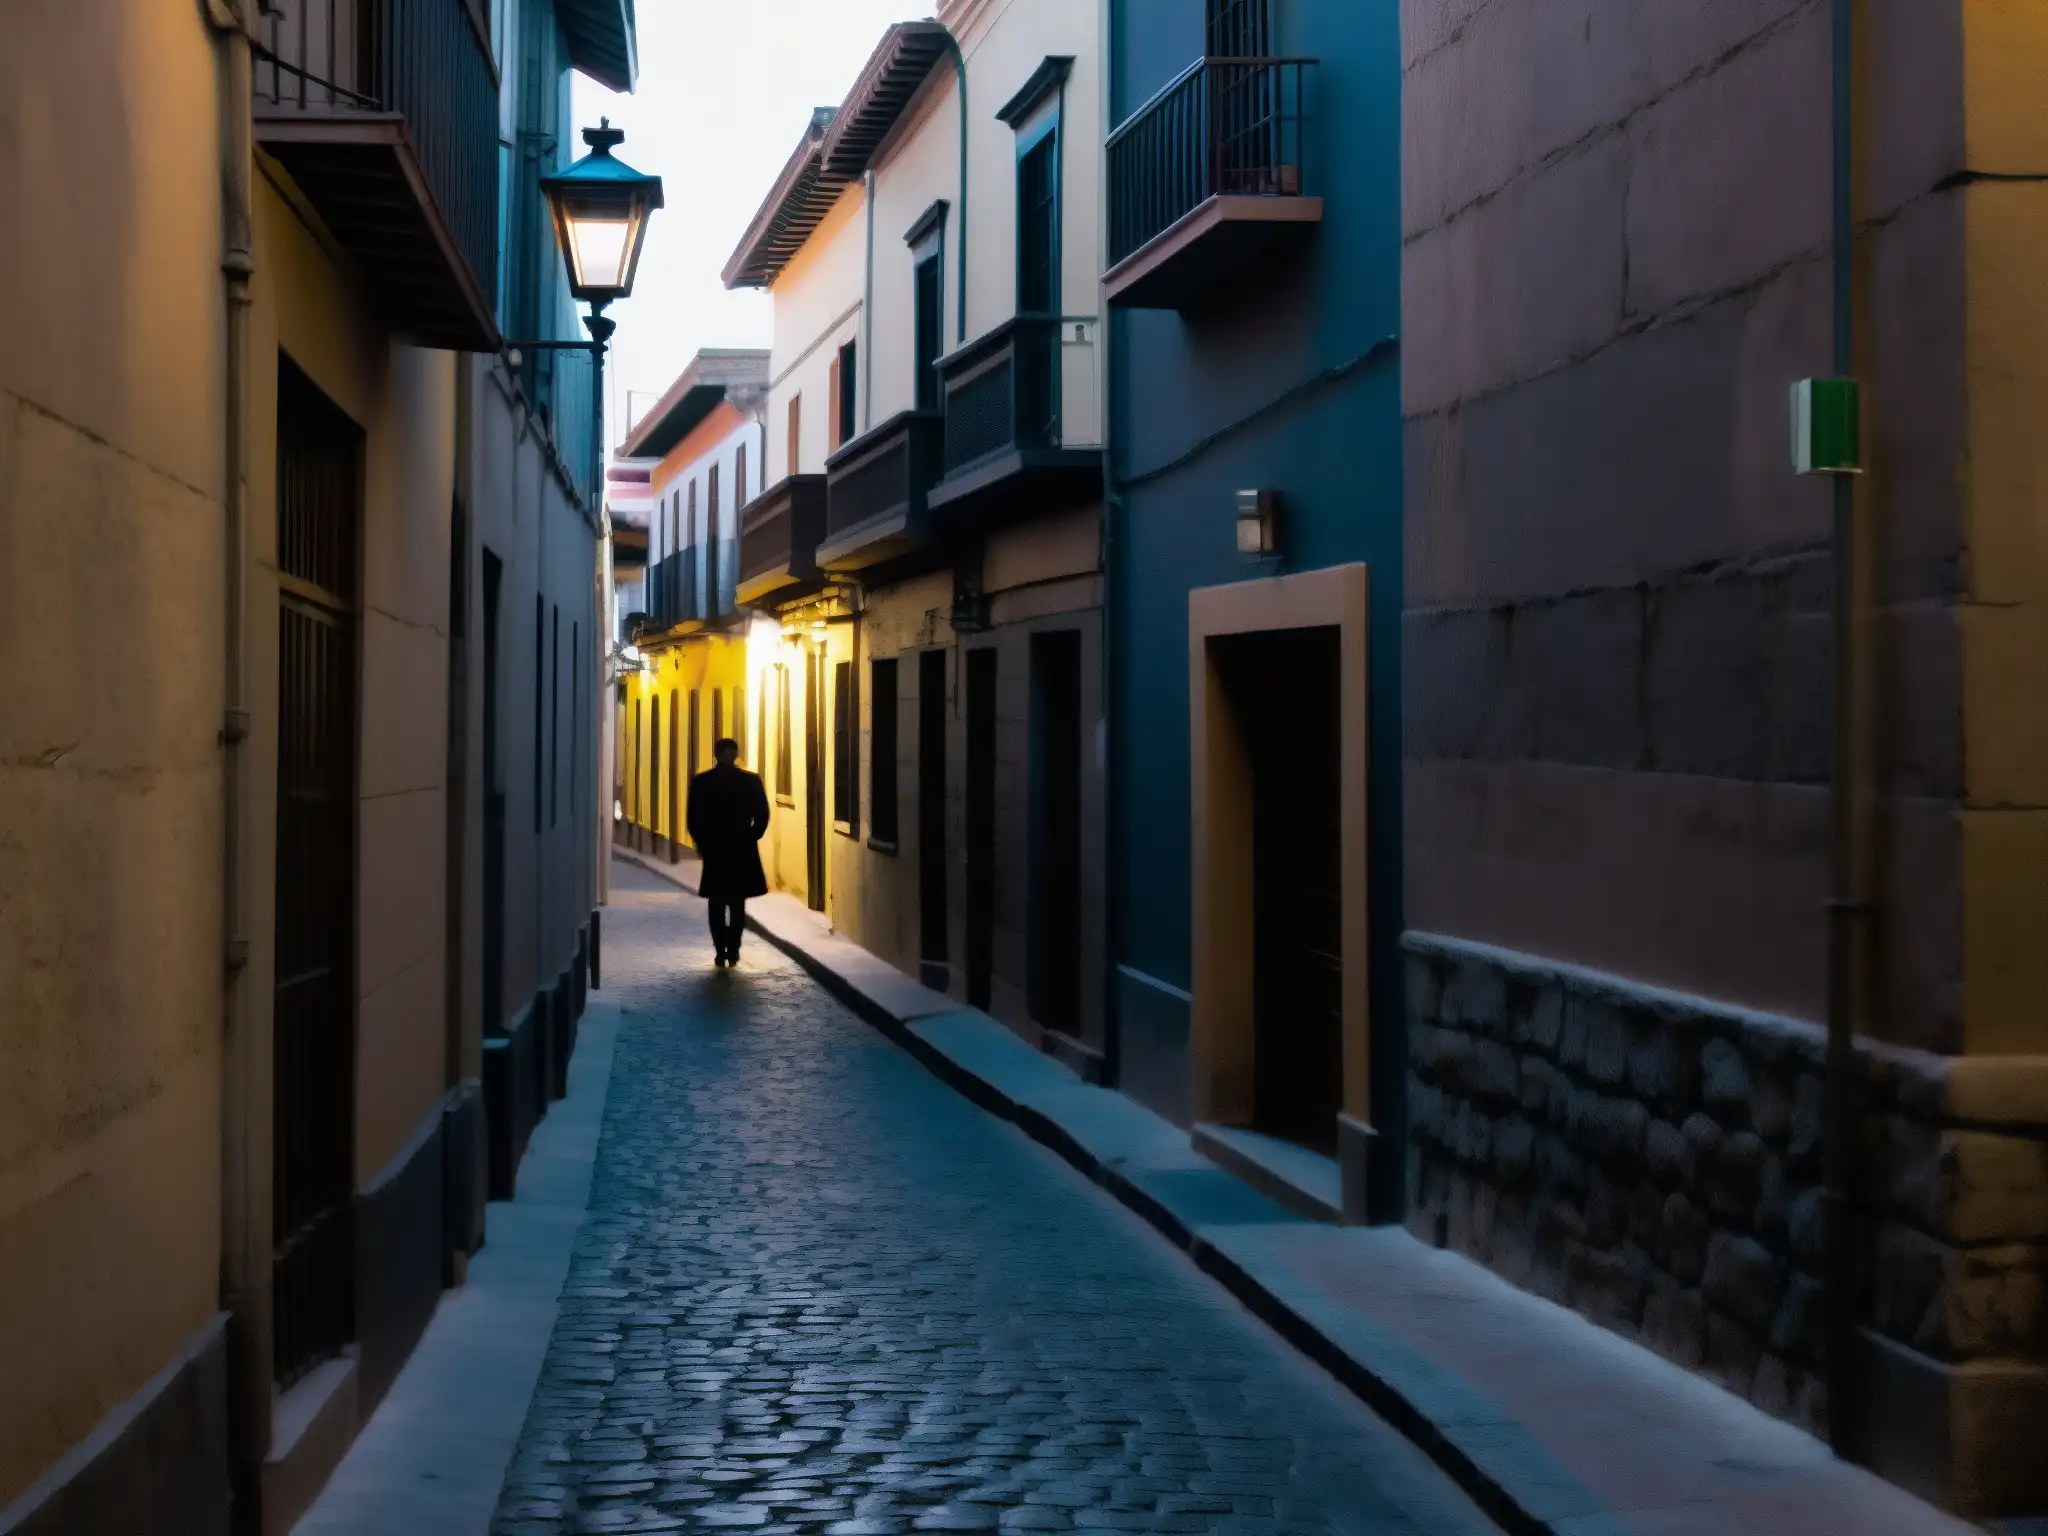 Un callejón oscuro en Guadalajara, México, con edificios antiguos y sombríos